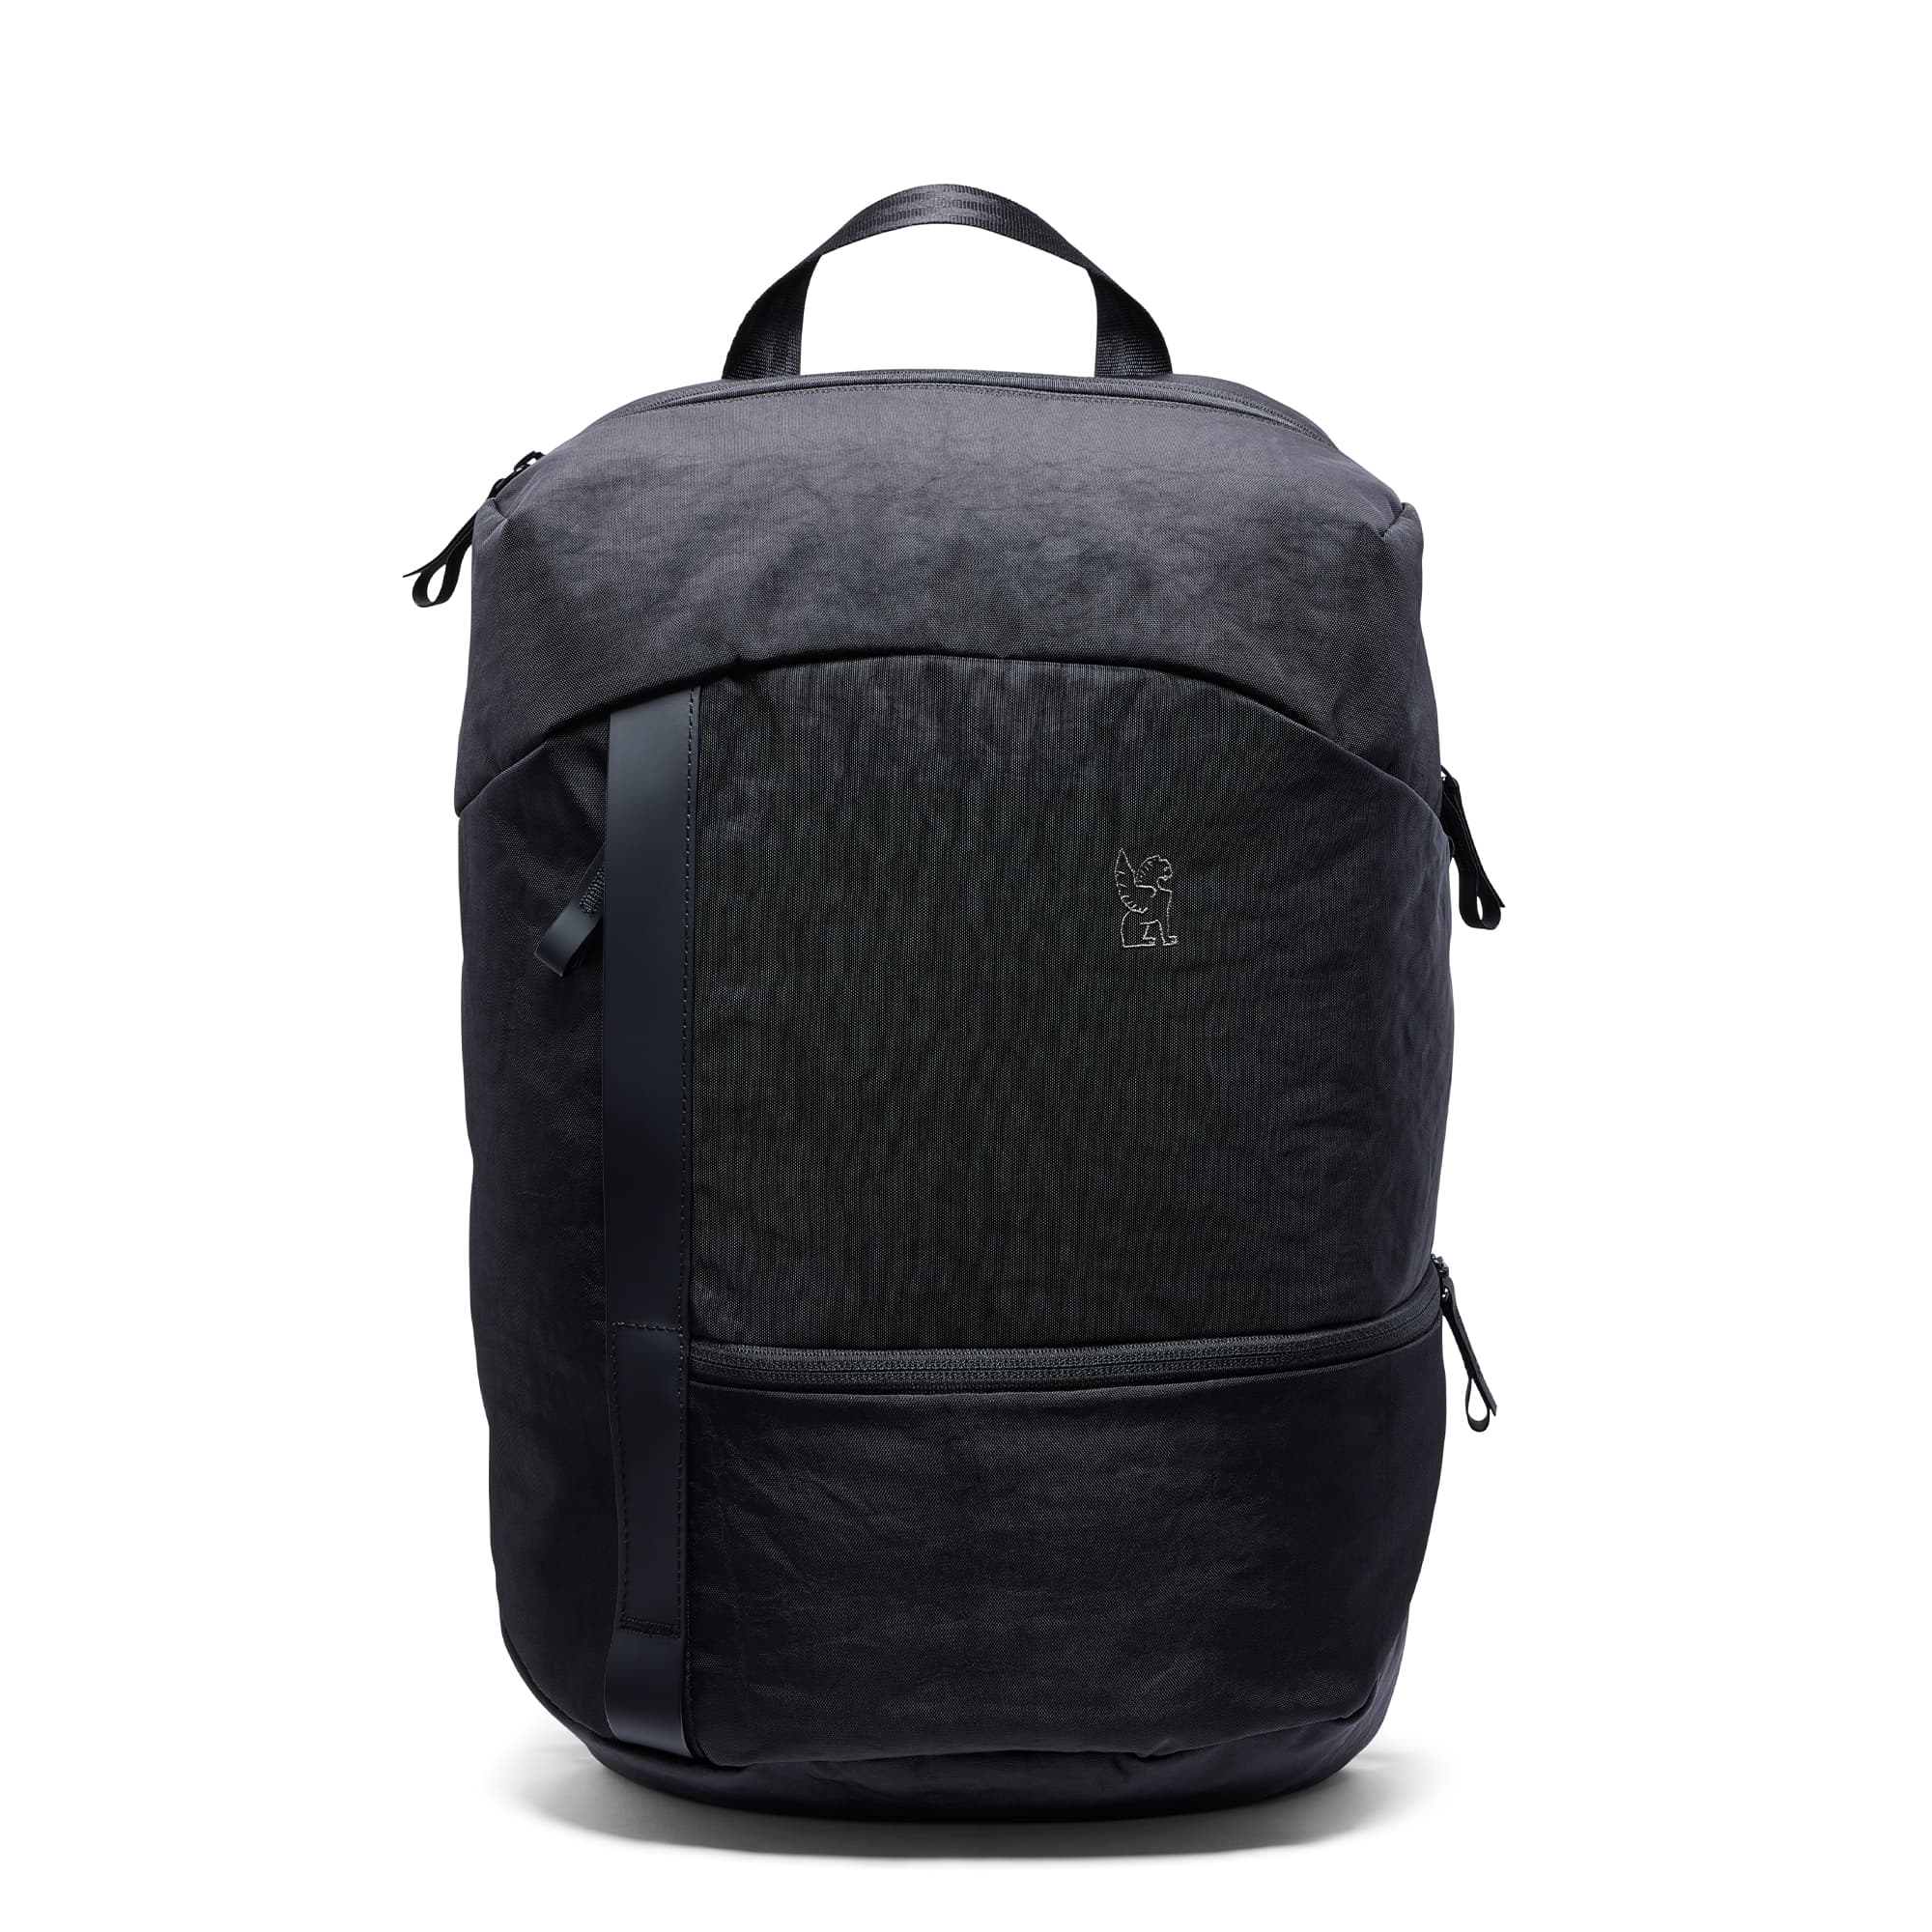 Camden backpack in black full front view #color_black